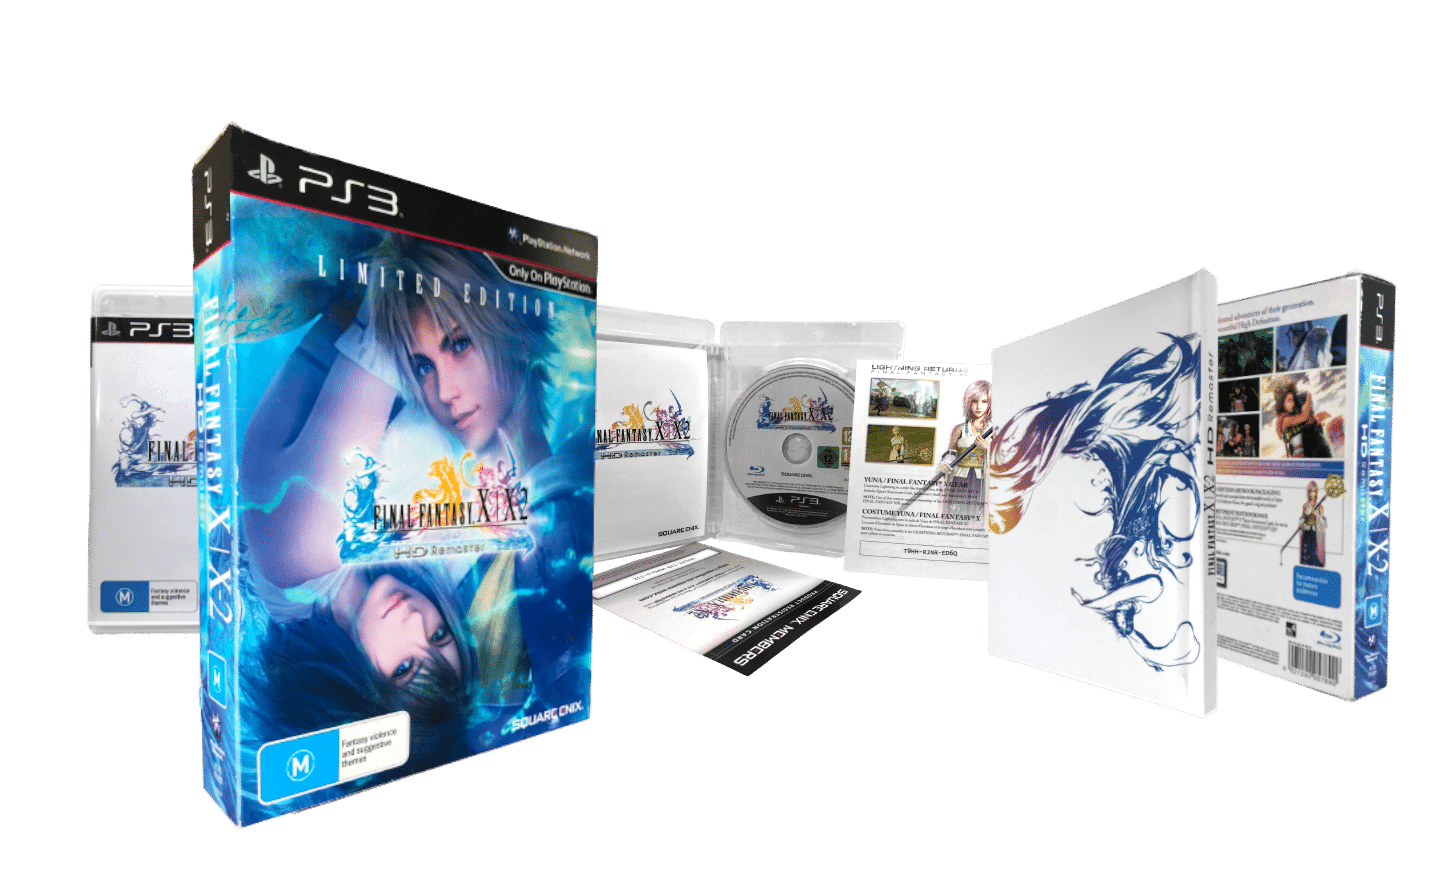 Final Fantasy X / X-2 HD Remaster Limited Edition [PlayStation 3] 